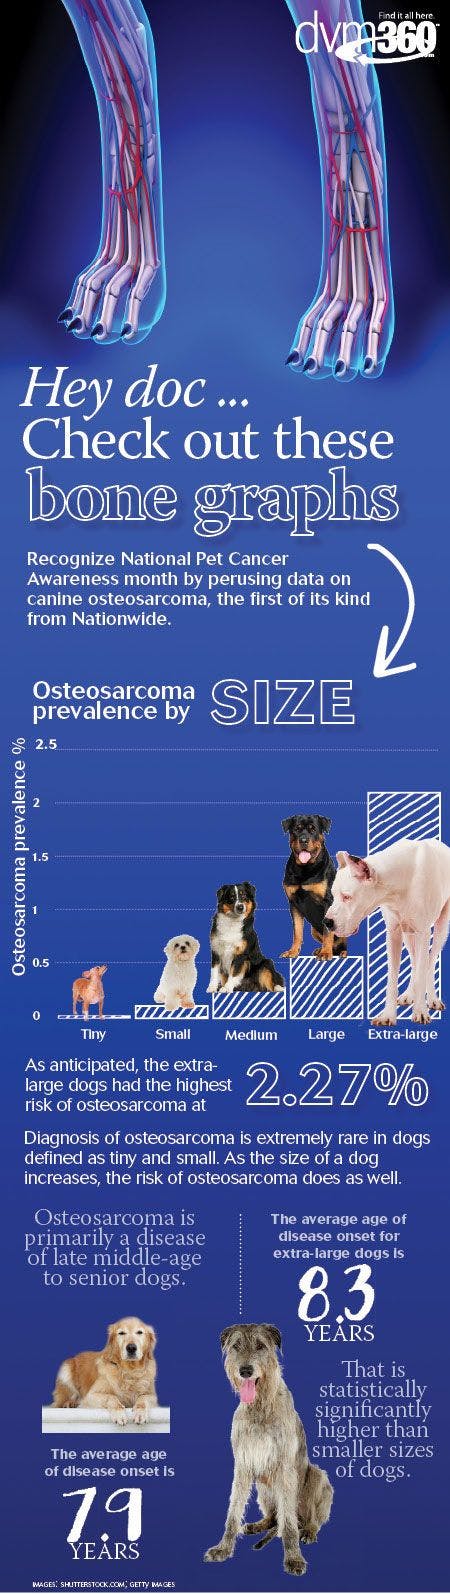 veterinary-osteosarcoma-1-450.jpg